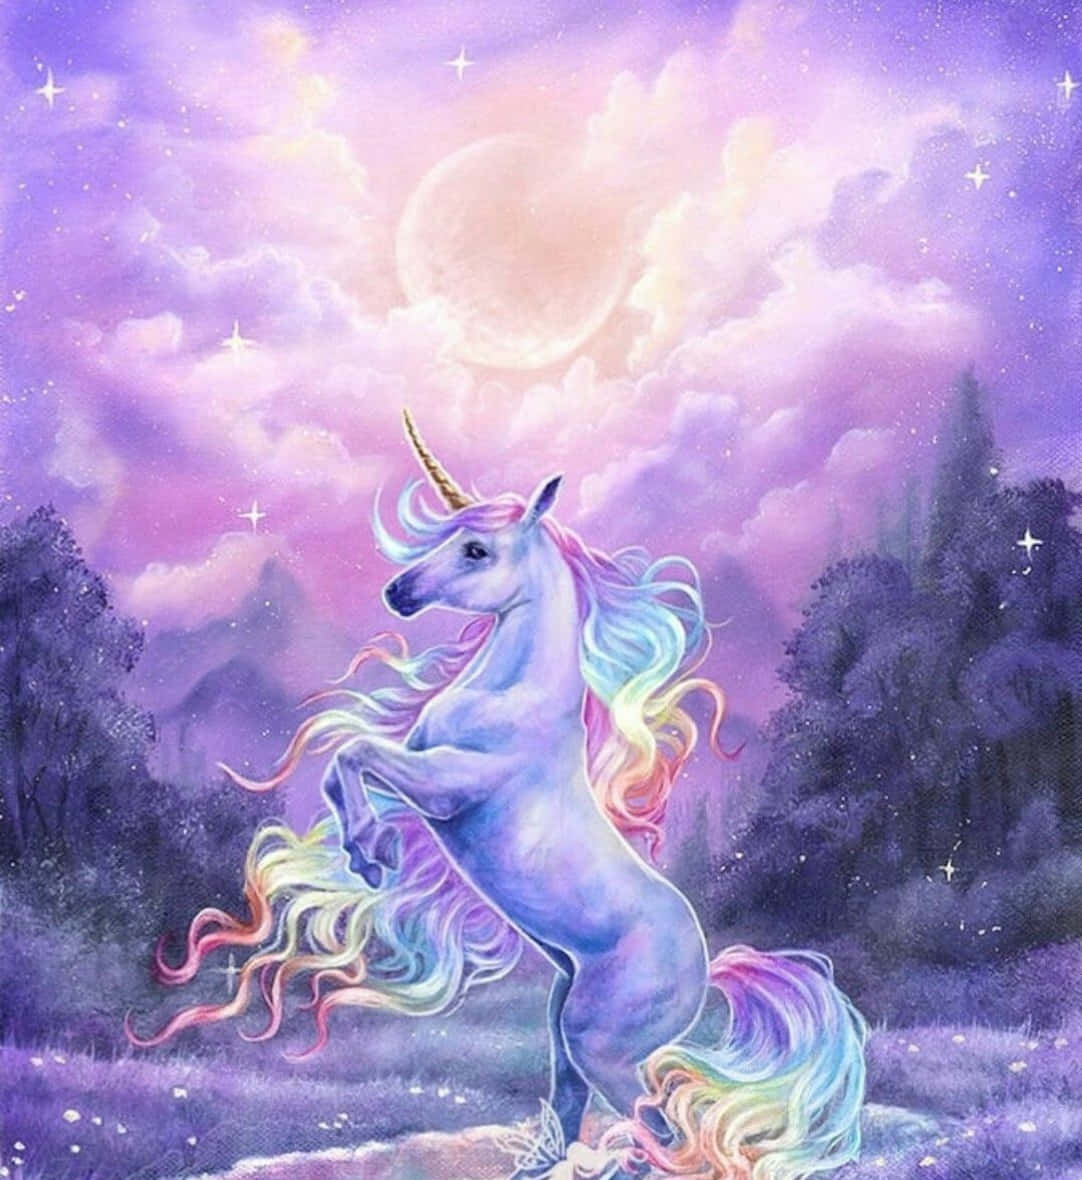 Exhilarate your imagination with a Rainbow Unicorn